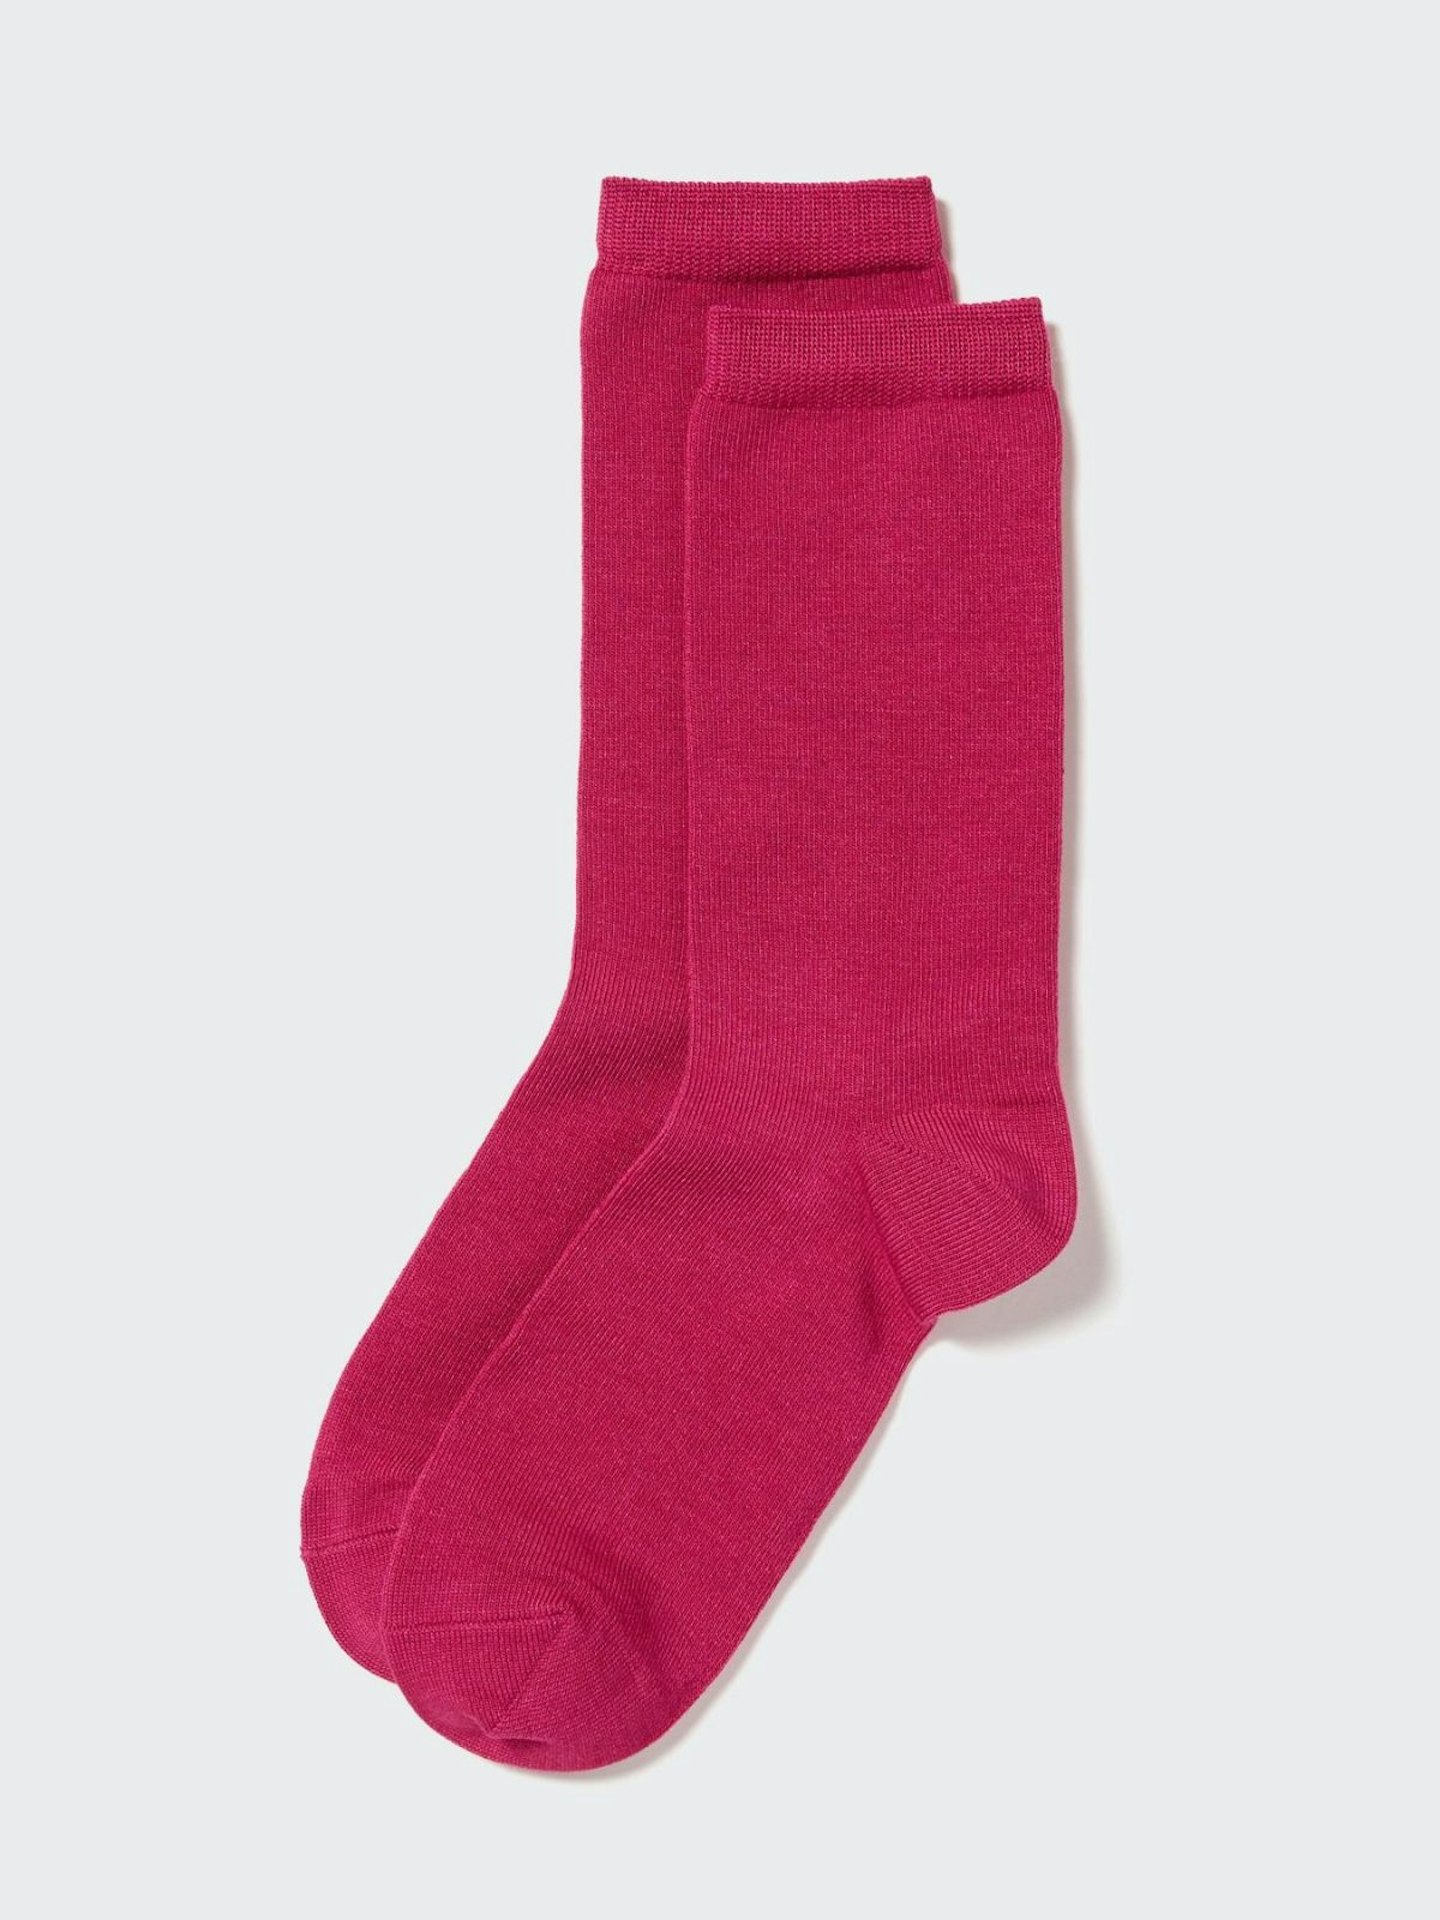 Uniqlo Heattech Thermal Socks